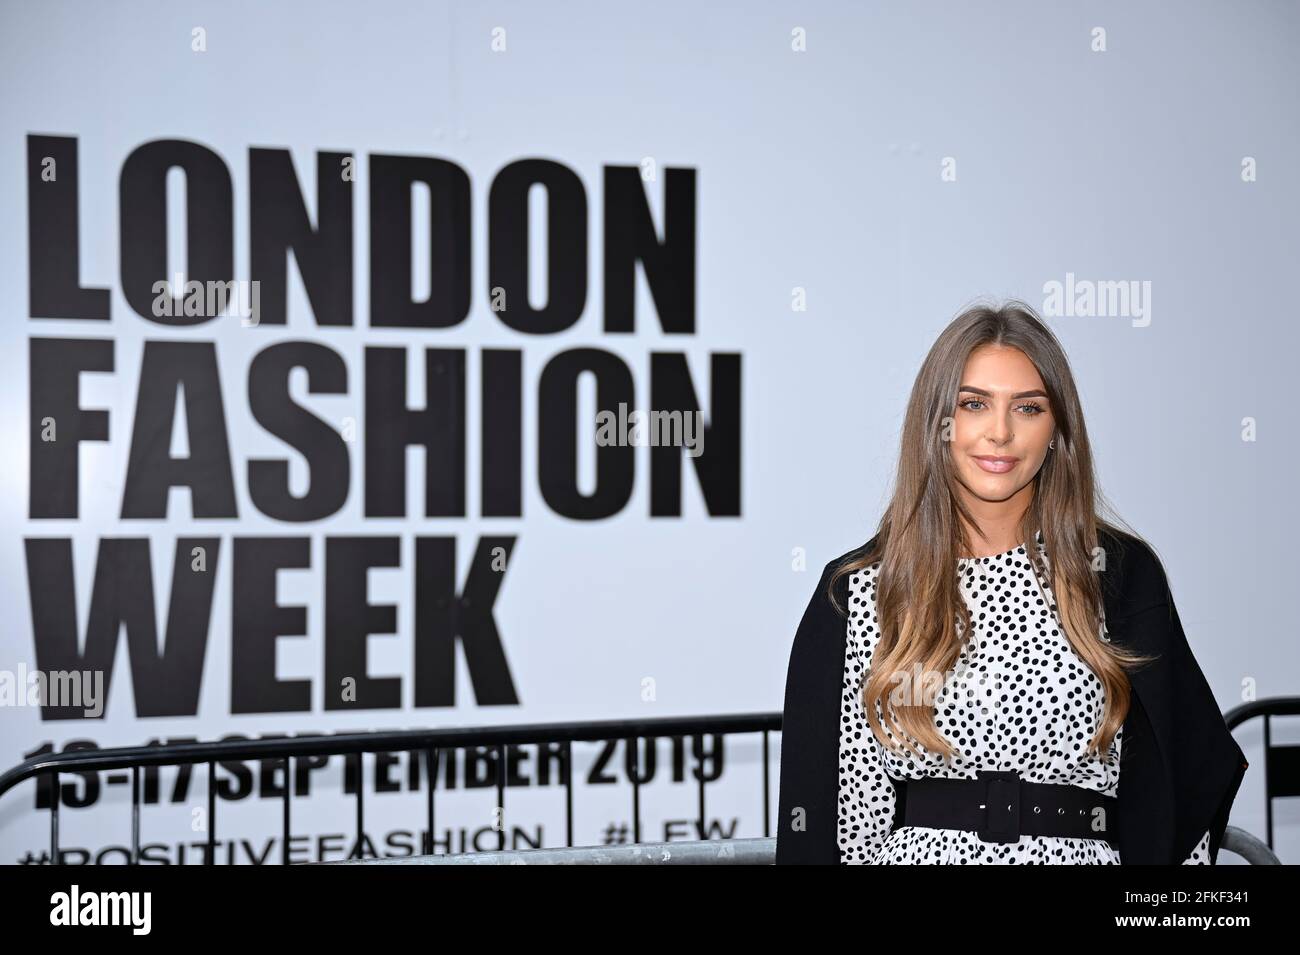 London Fashion Week Stock Photo